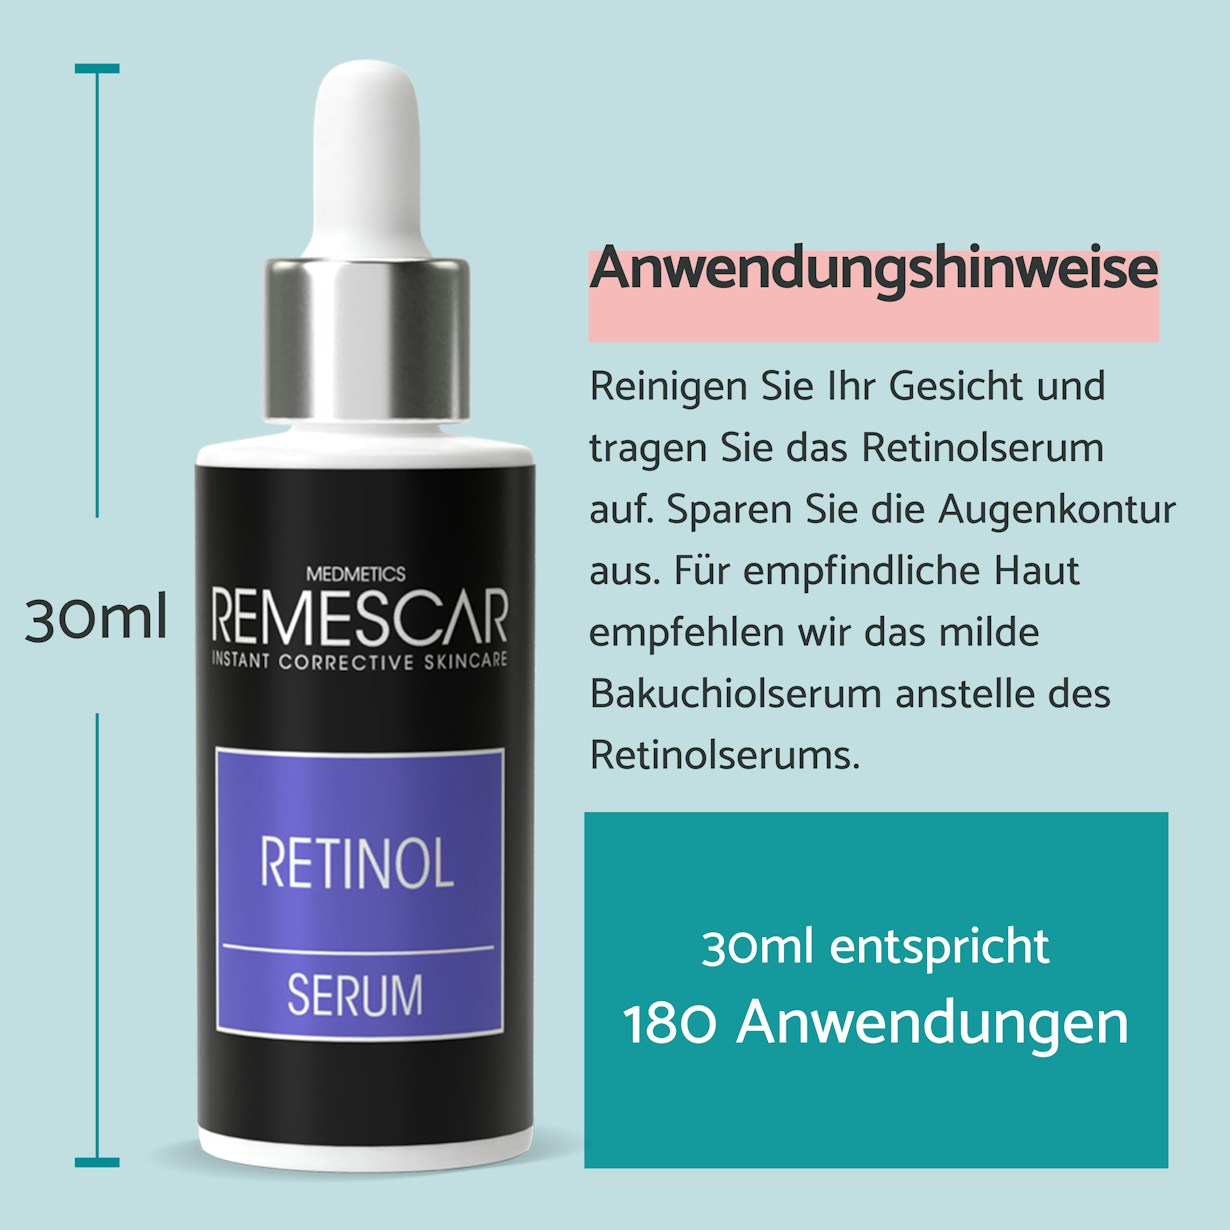 Remescar pdp pictures website and amazon 2000x2000px retinol serum DE4